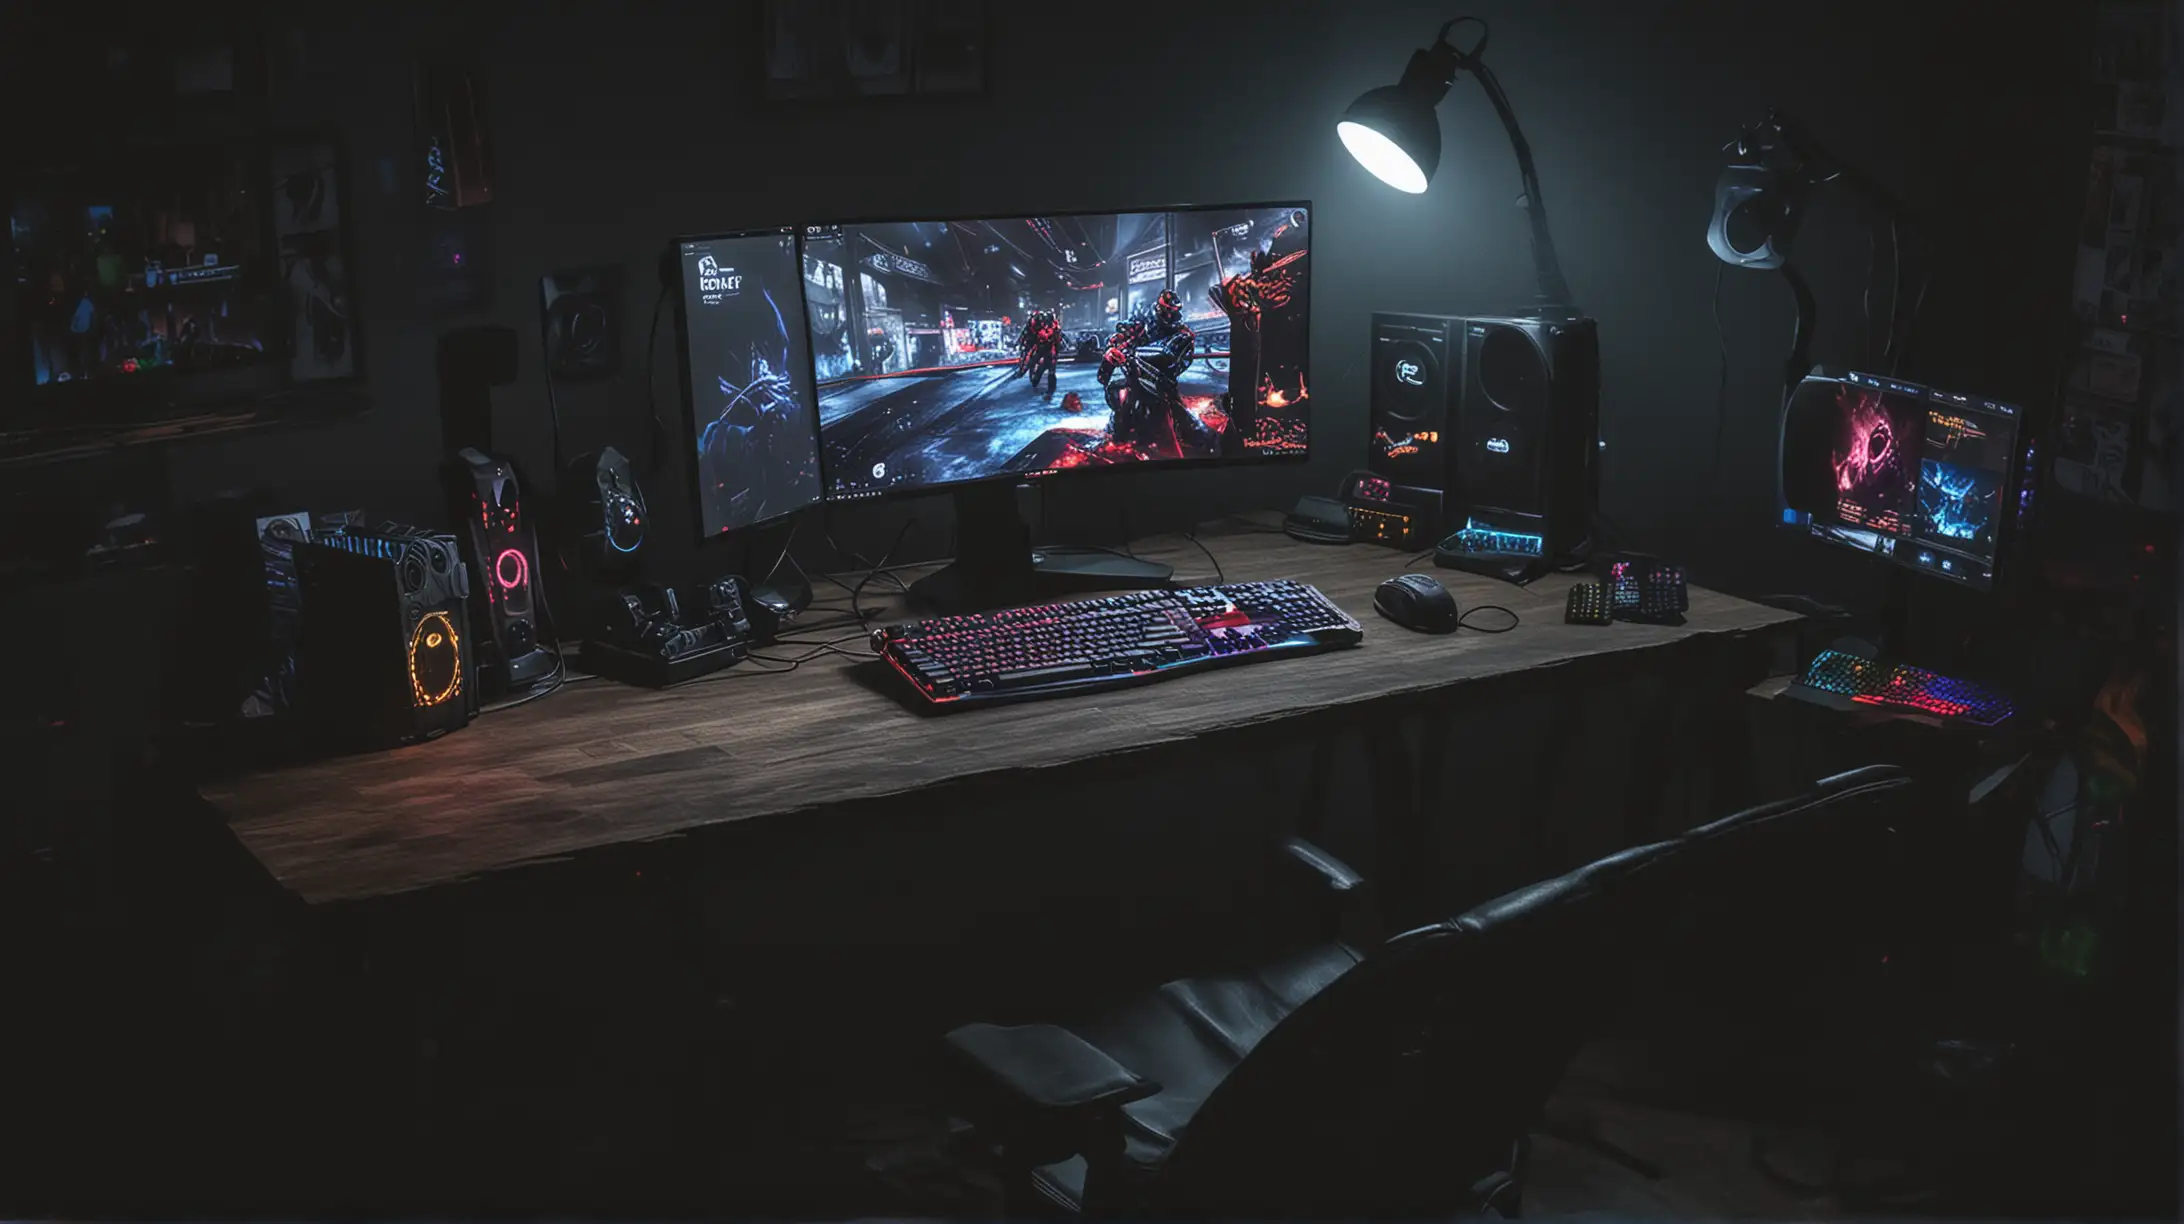 Gaming Setup with Illuminated RGB Keyboard in Dark Room